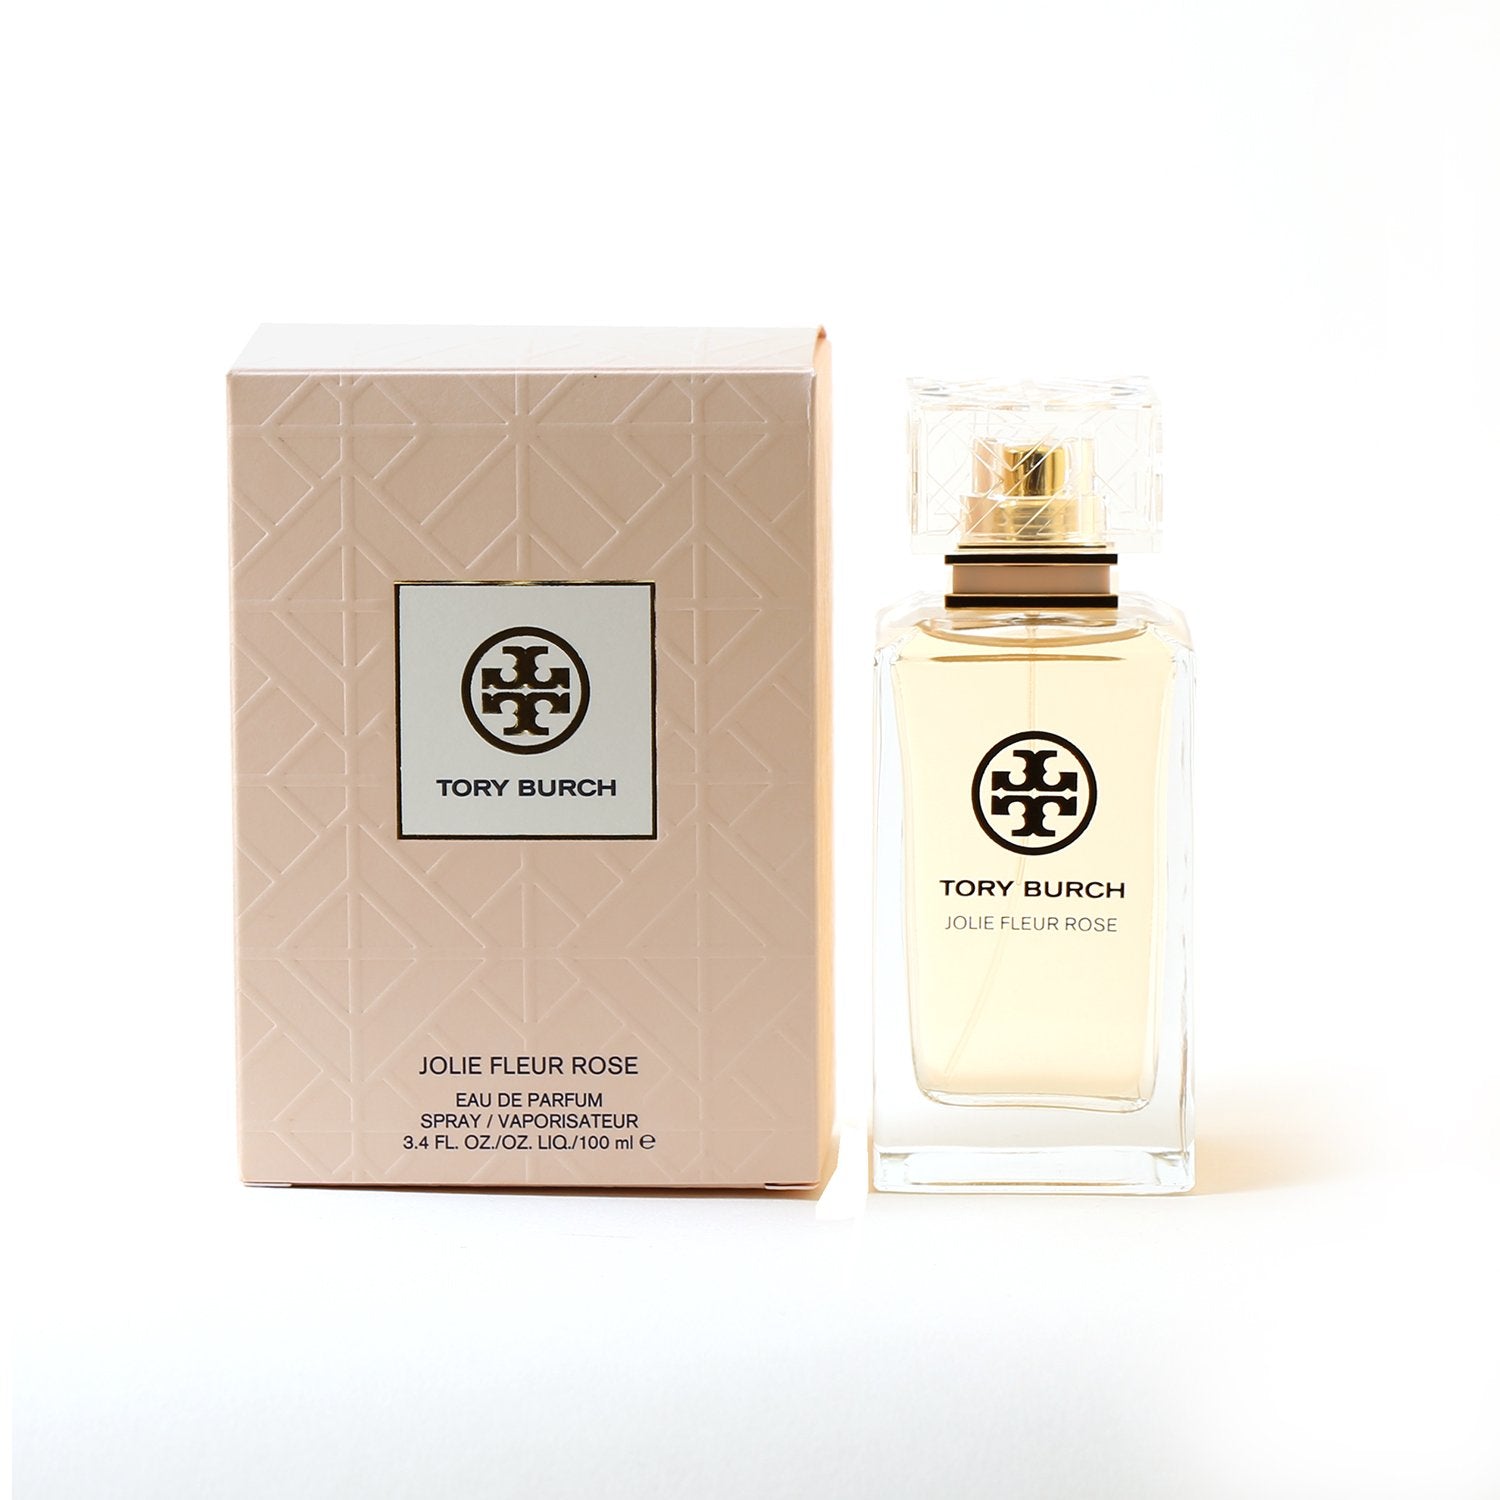 TORY BURCH JOLIE FLEUR ROSE FOR WOMEN - EAU DE PARFUM SPRAY – Fragrance ...